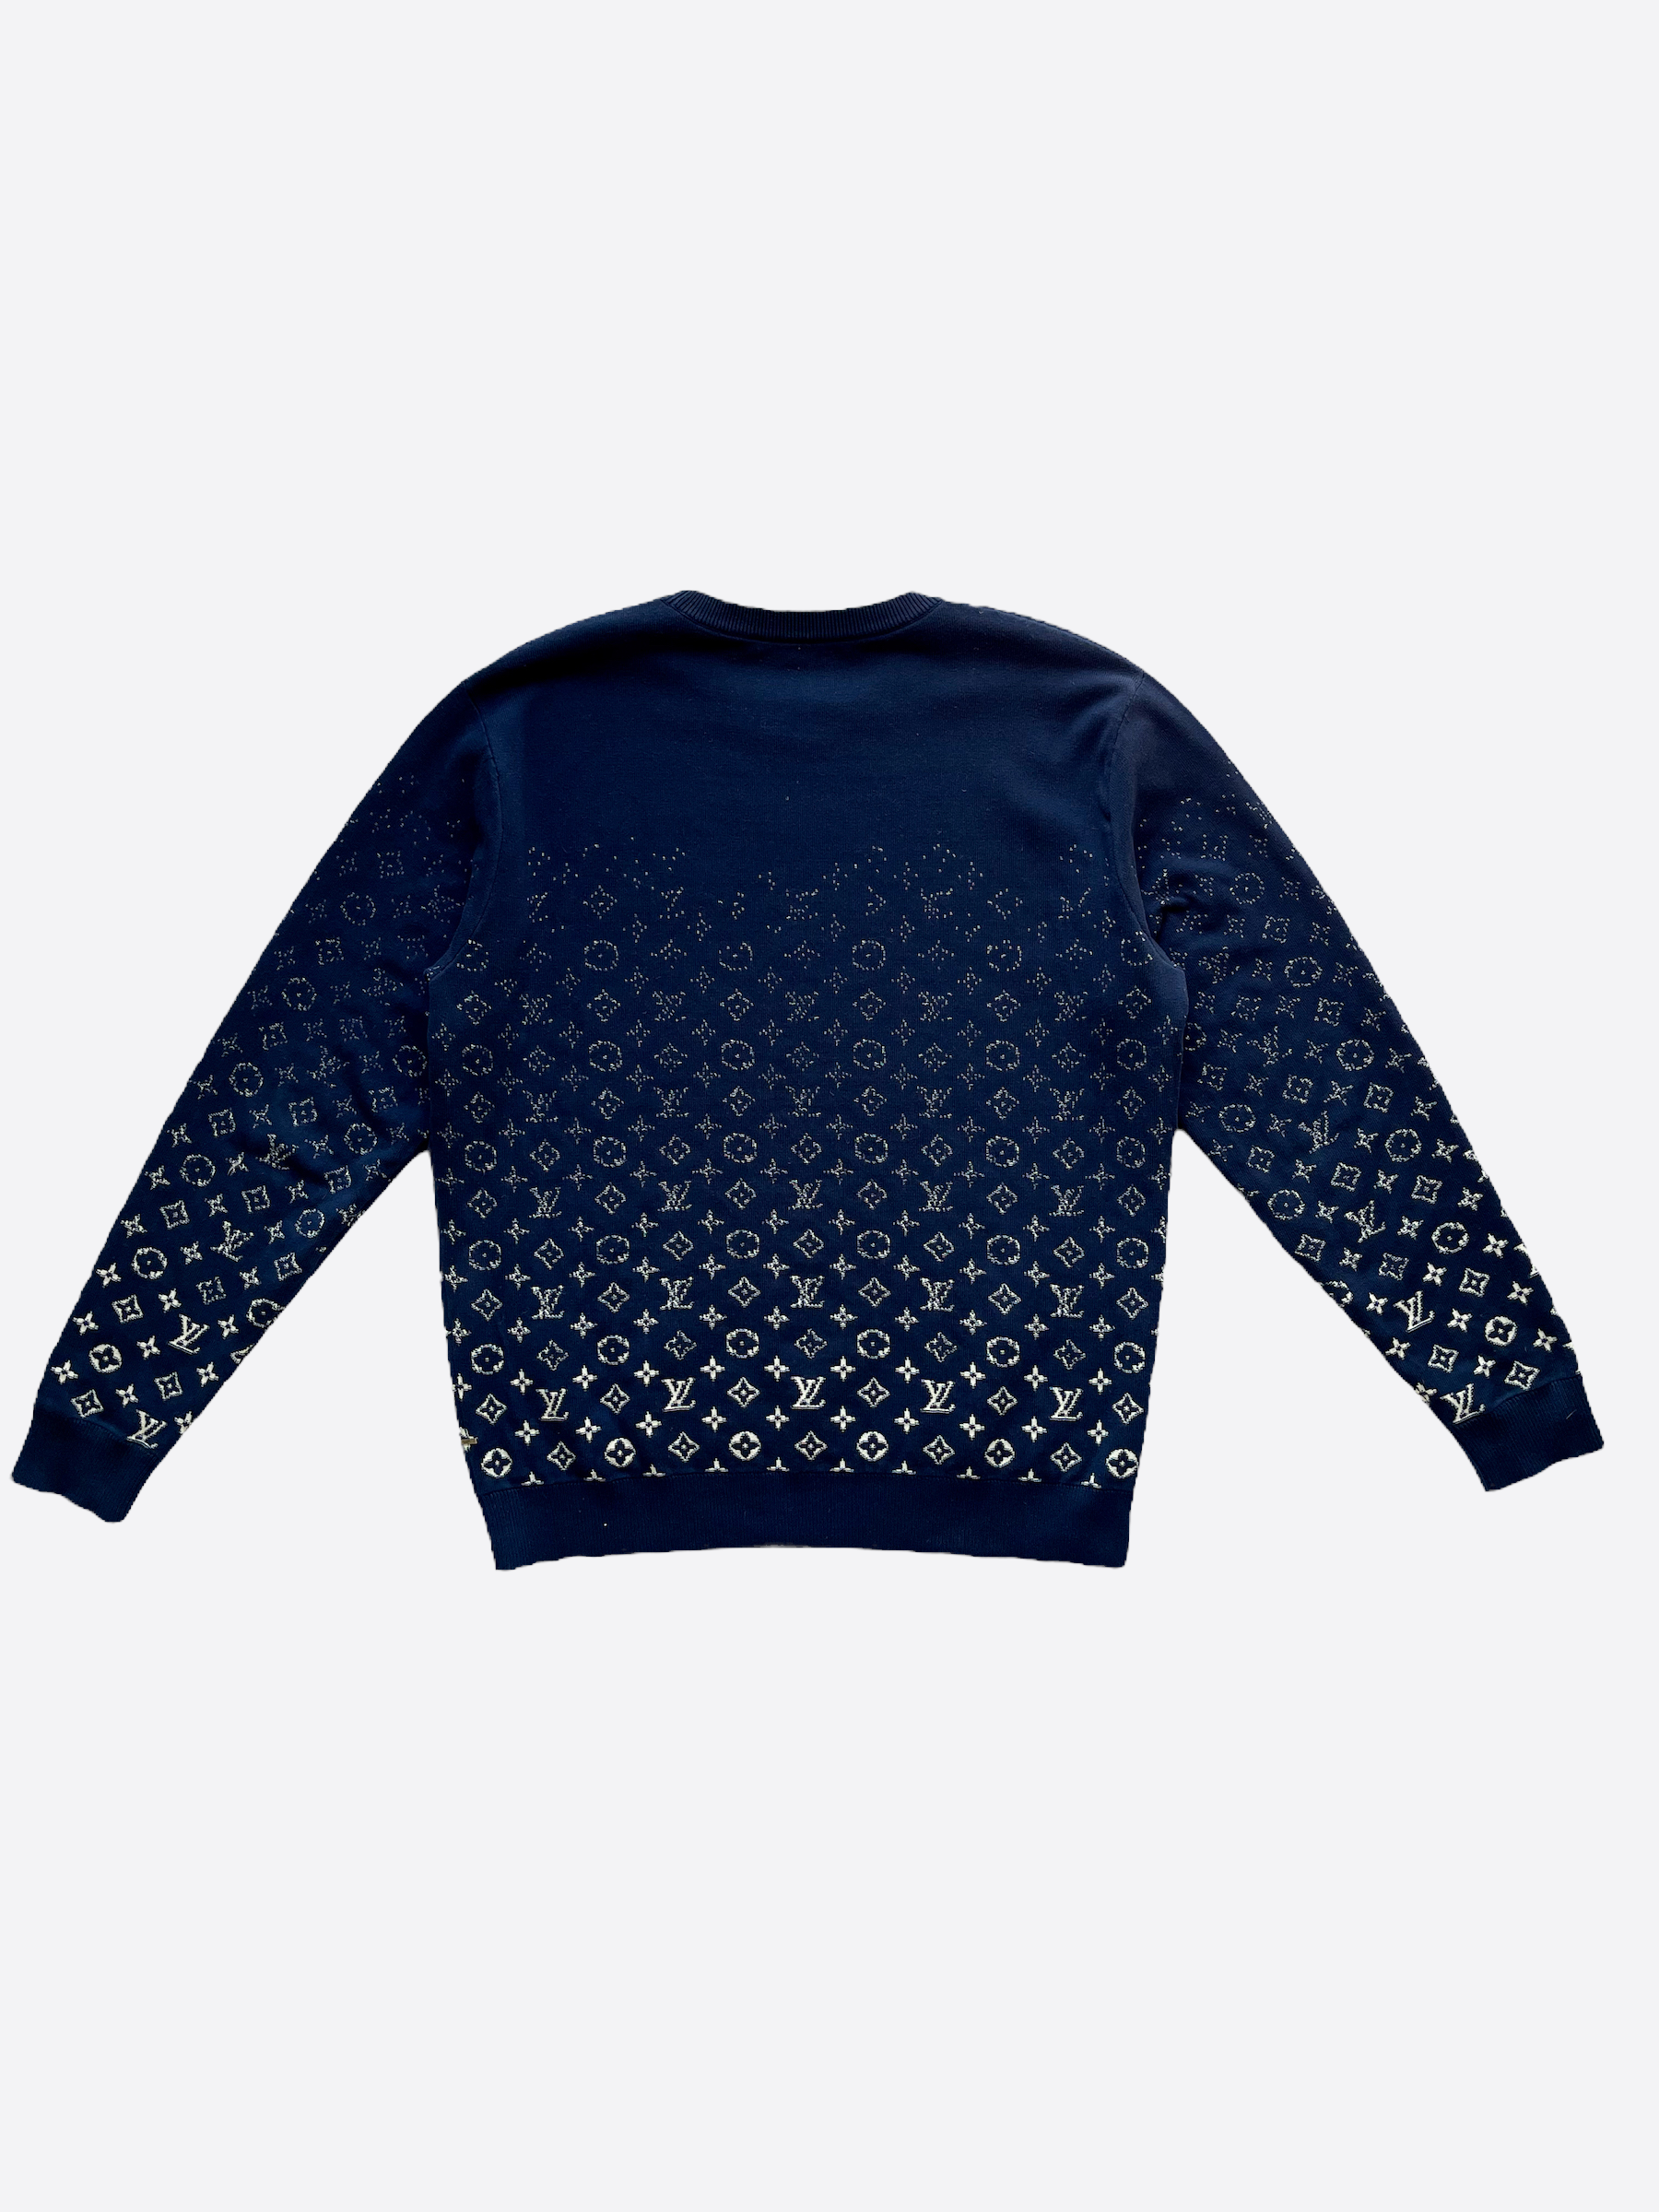 Louis Vuitton, Sweaters, Louis Vuitton Marble Tie Dye Crewneck Sweatshirt  Hoodie Navy Blue Xl Peace Sign